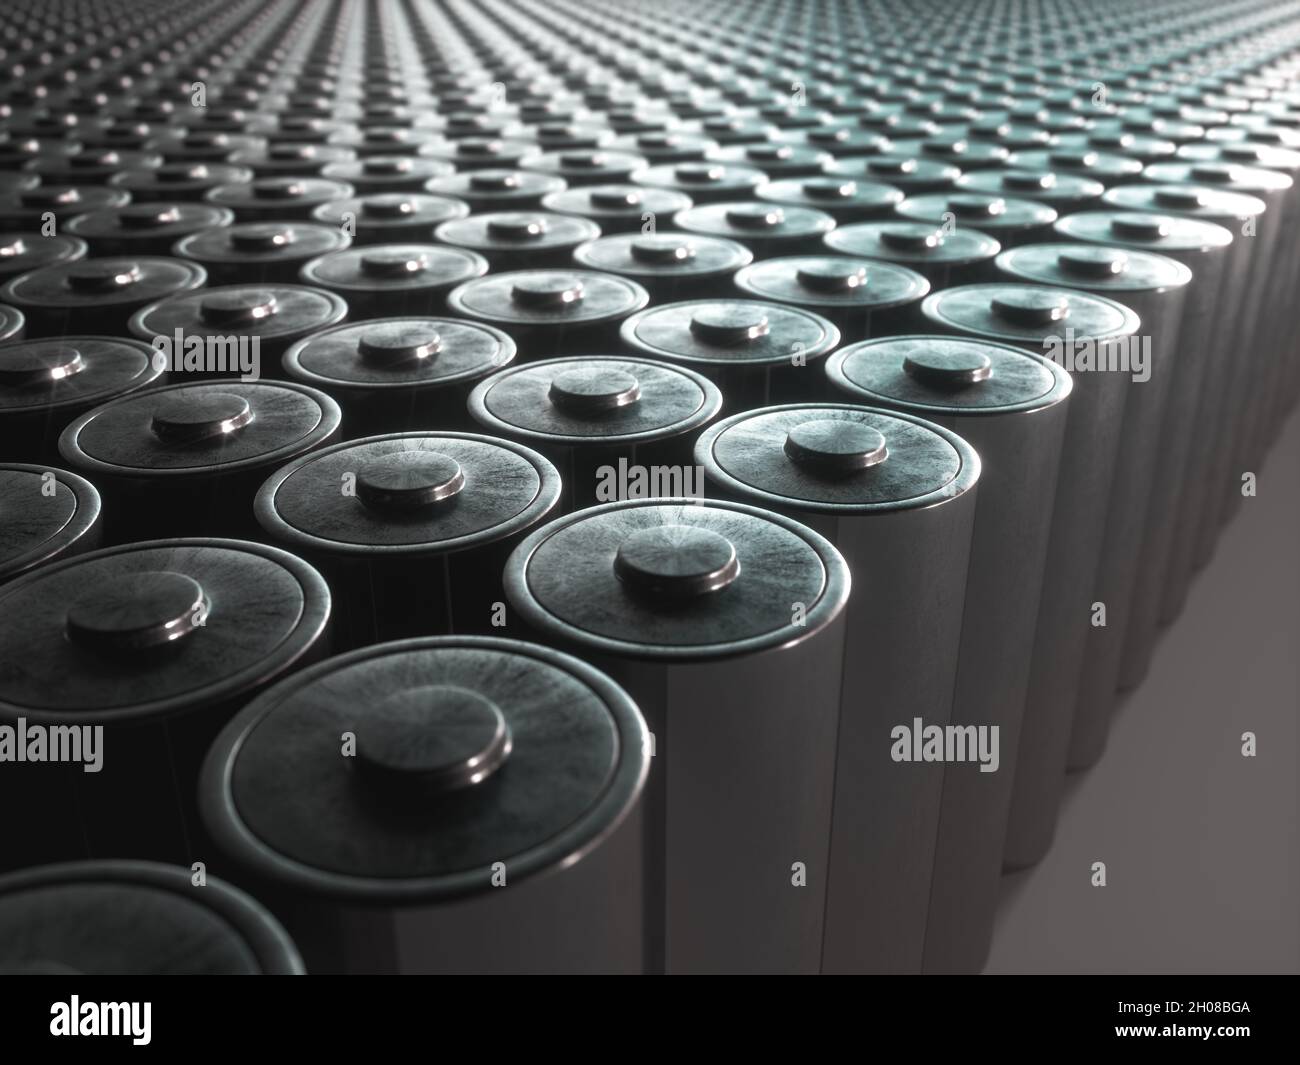 3D-Illustration, Konzeptbild von Batterie-Recycling, erneuerbare Energie. Stockfoto